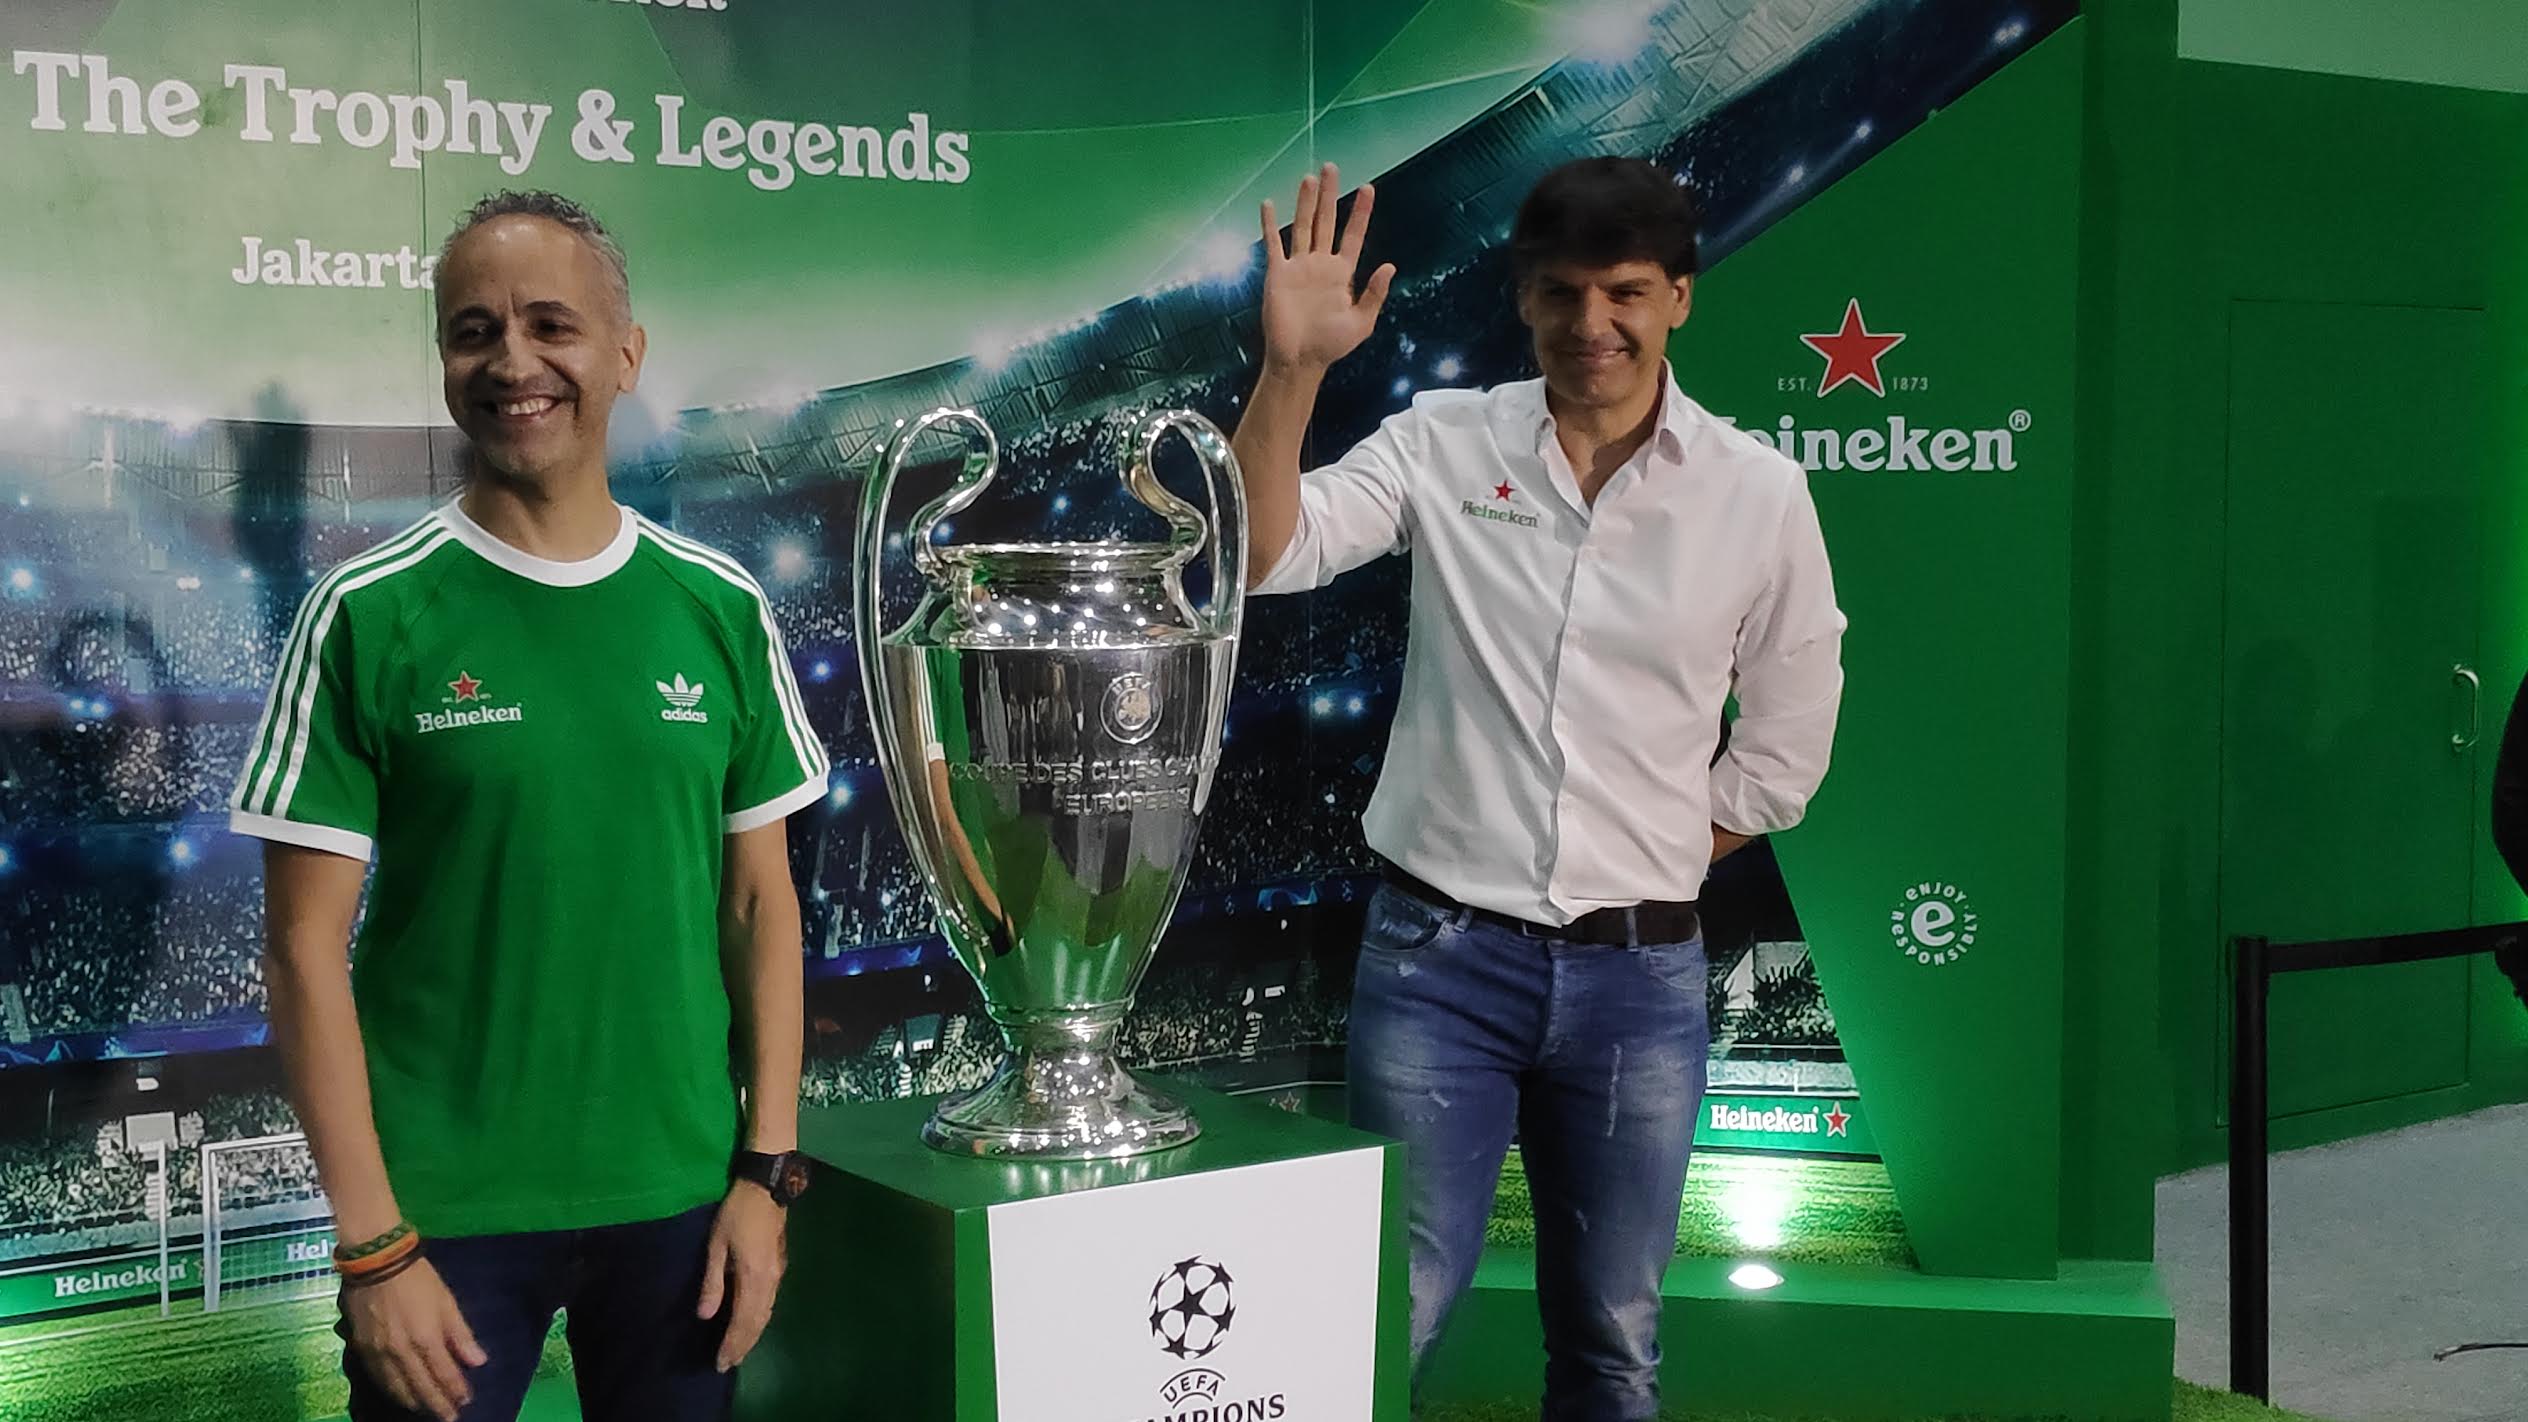 Heineken Hadirkan Trophy UEFA Champions League Beserta 2 Pemain Legendaris